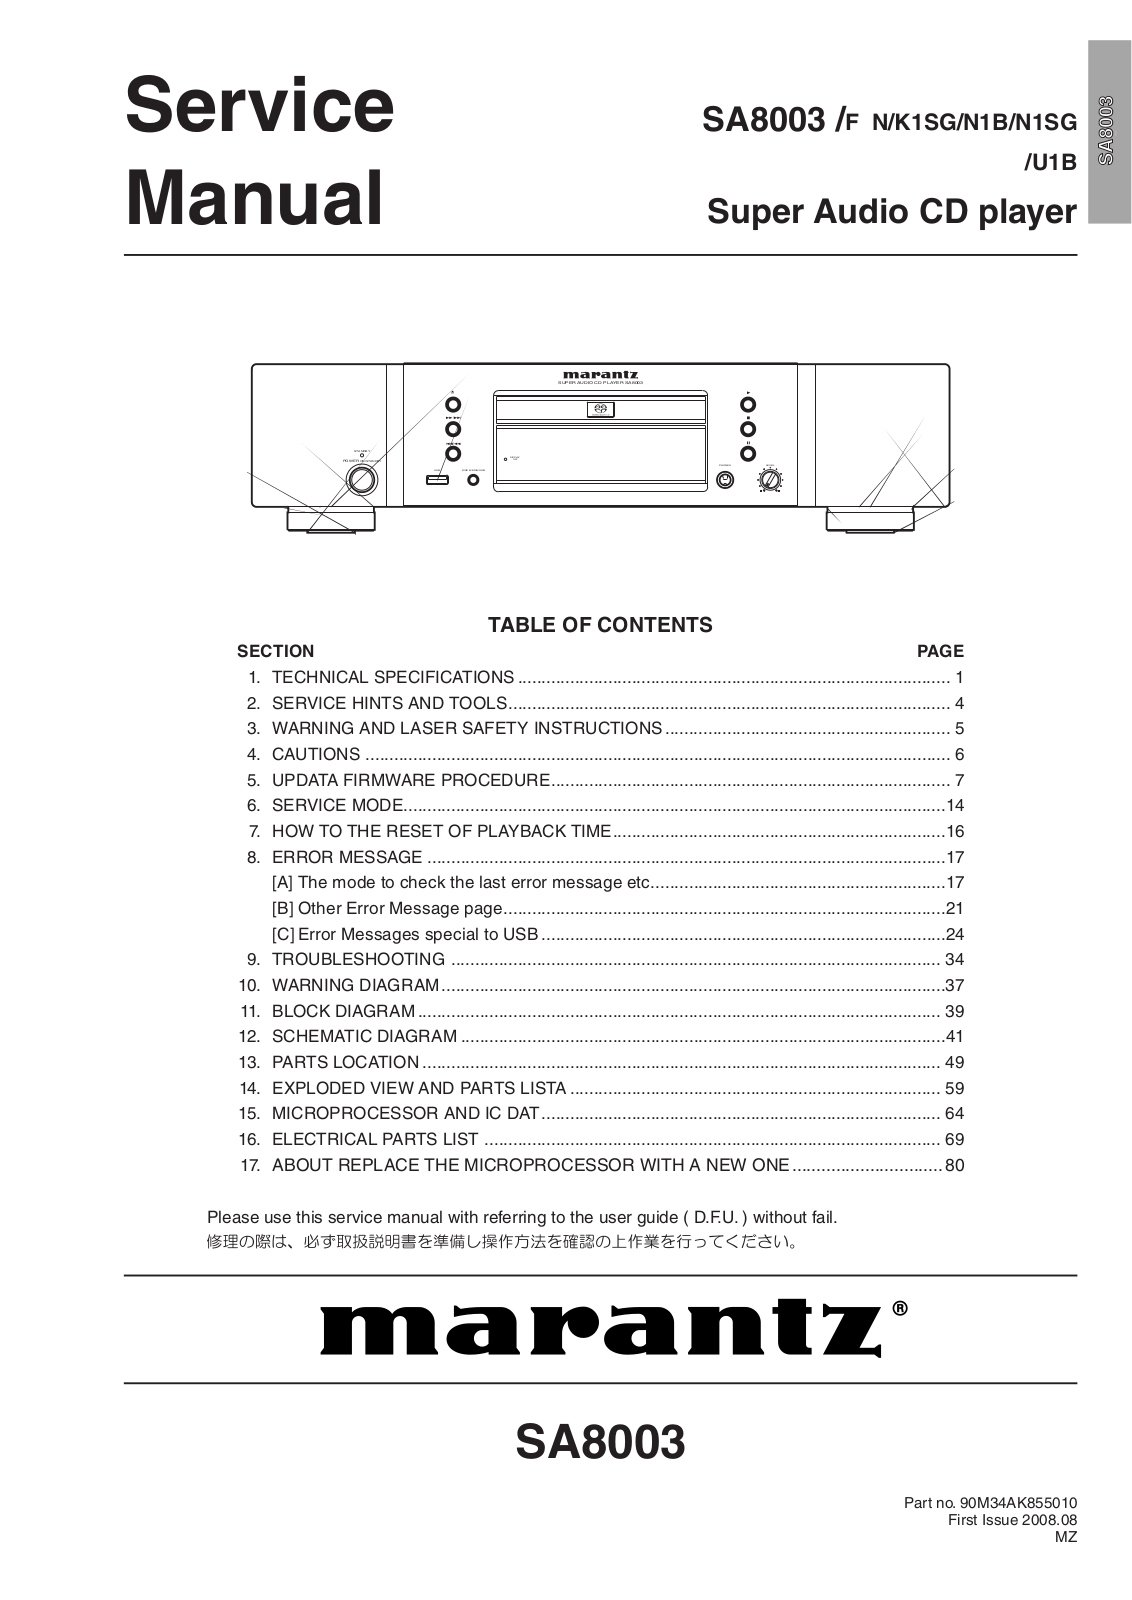 Marantz SA-8003 Service Manual